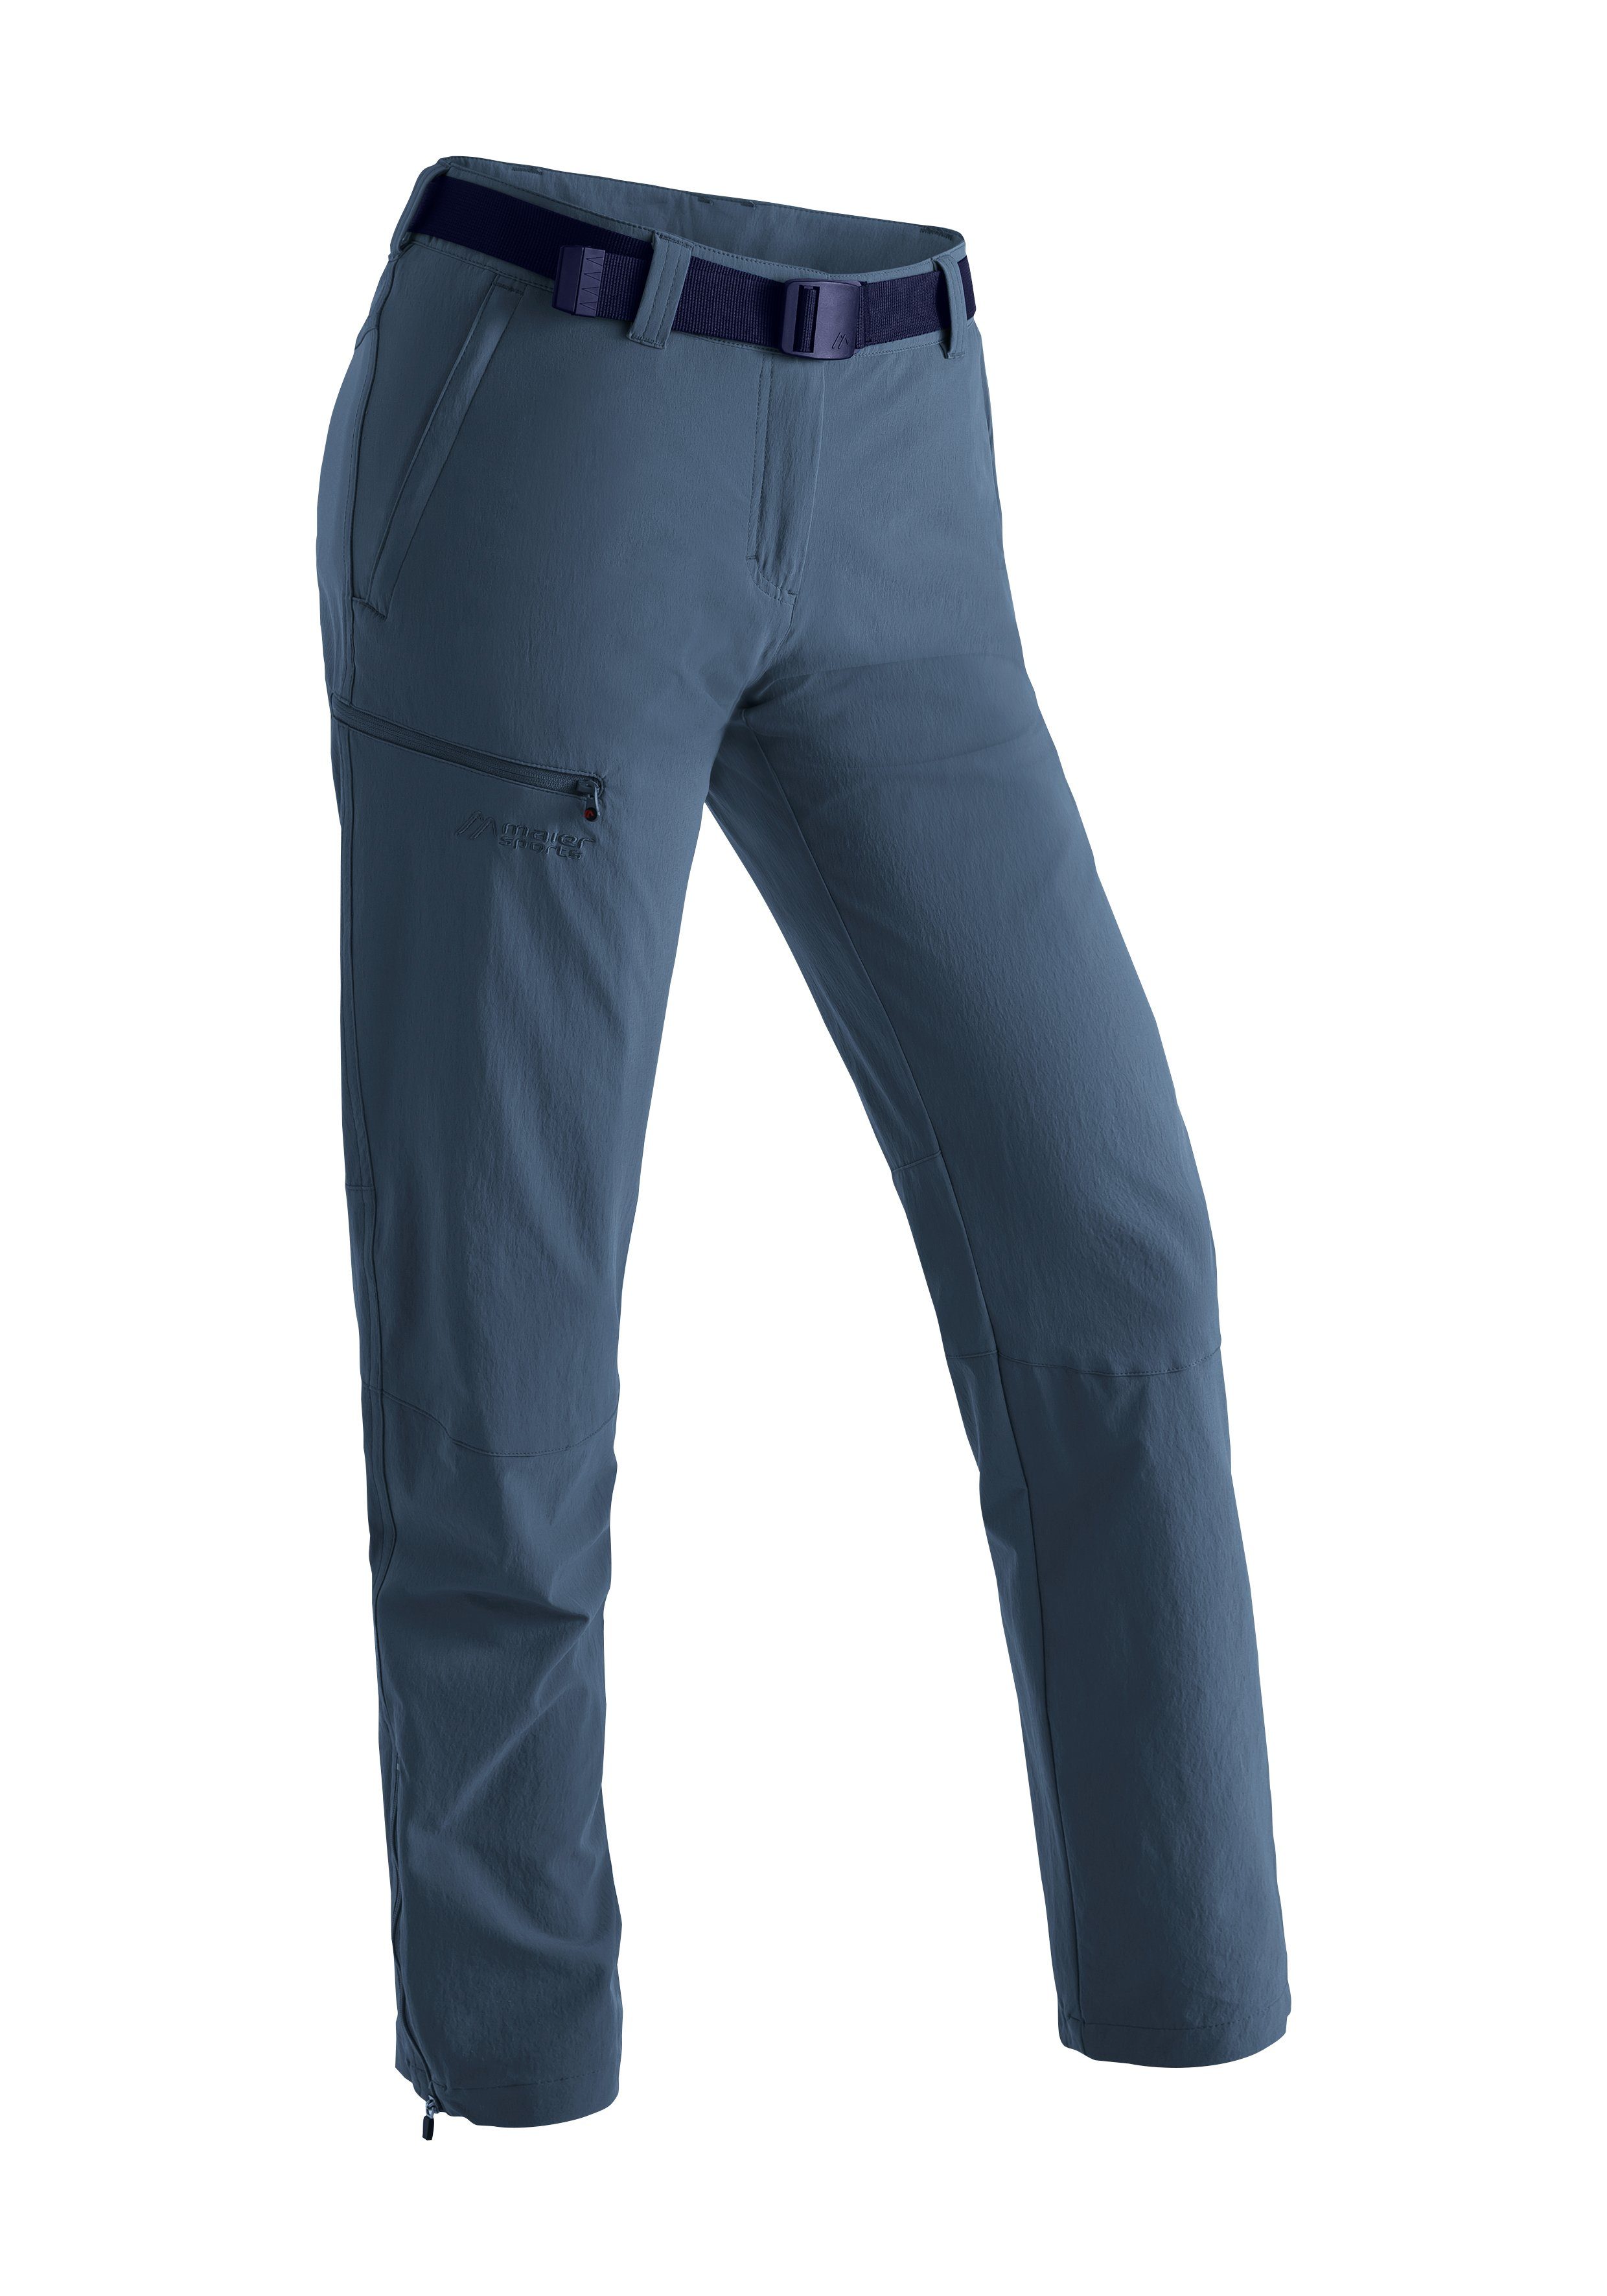 Maier Sports Funktionshose Inara slim Damen Wanderhose, Outdoor-Hose aus elastischem Material jeansblau